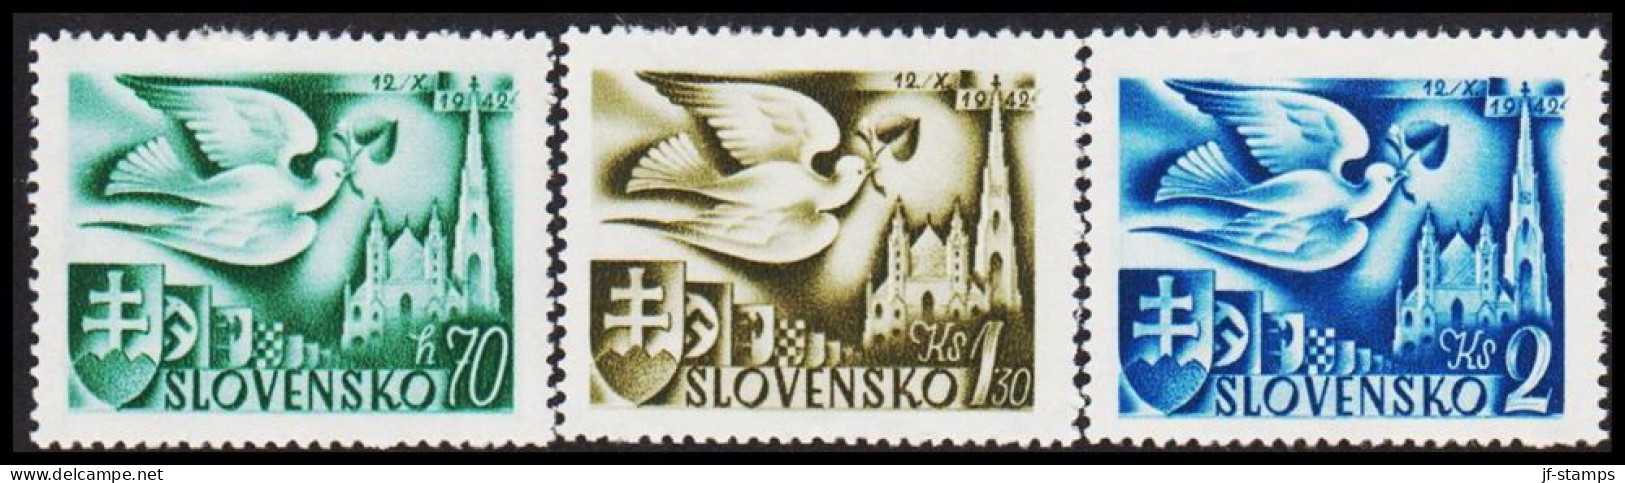 1942. SLOVENSKO European Post Congress Complete Set Hinged.  (Michel 102-104) - JF545989 - Unused Stamps